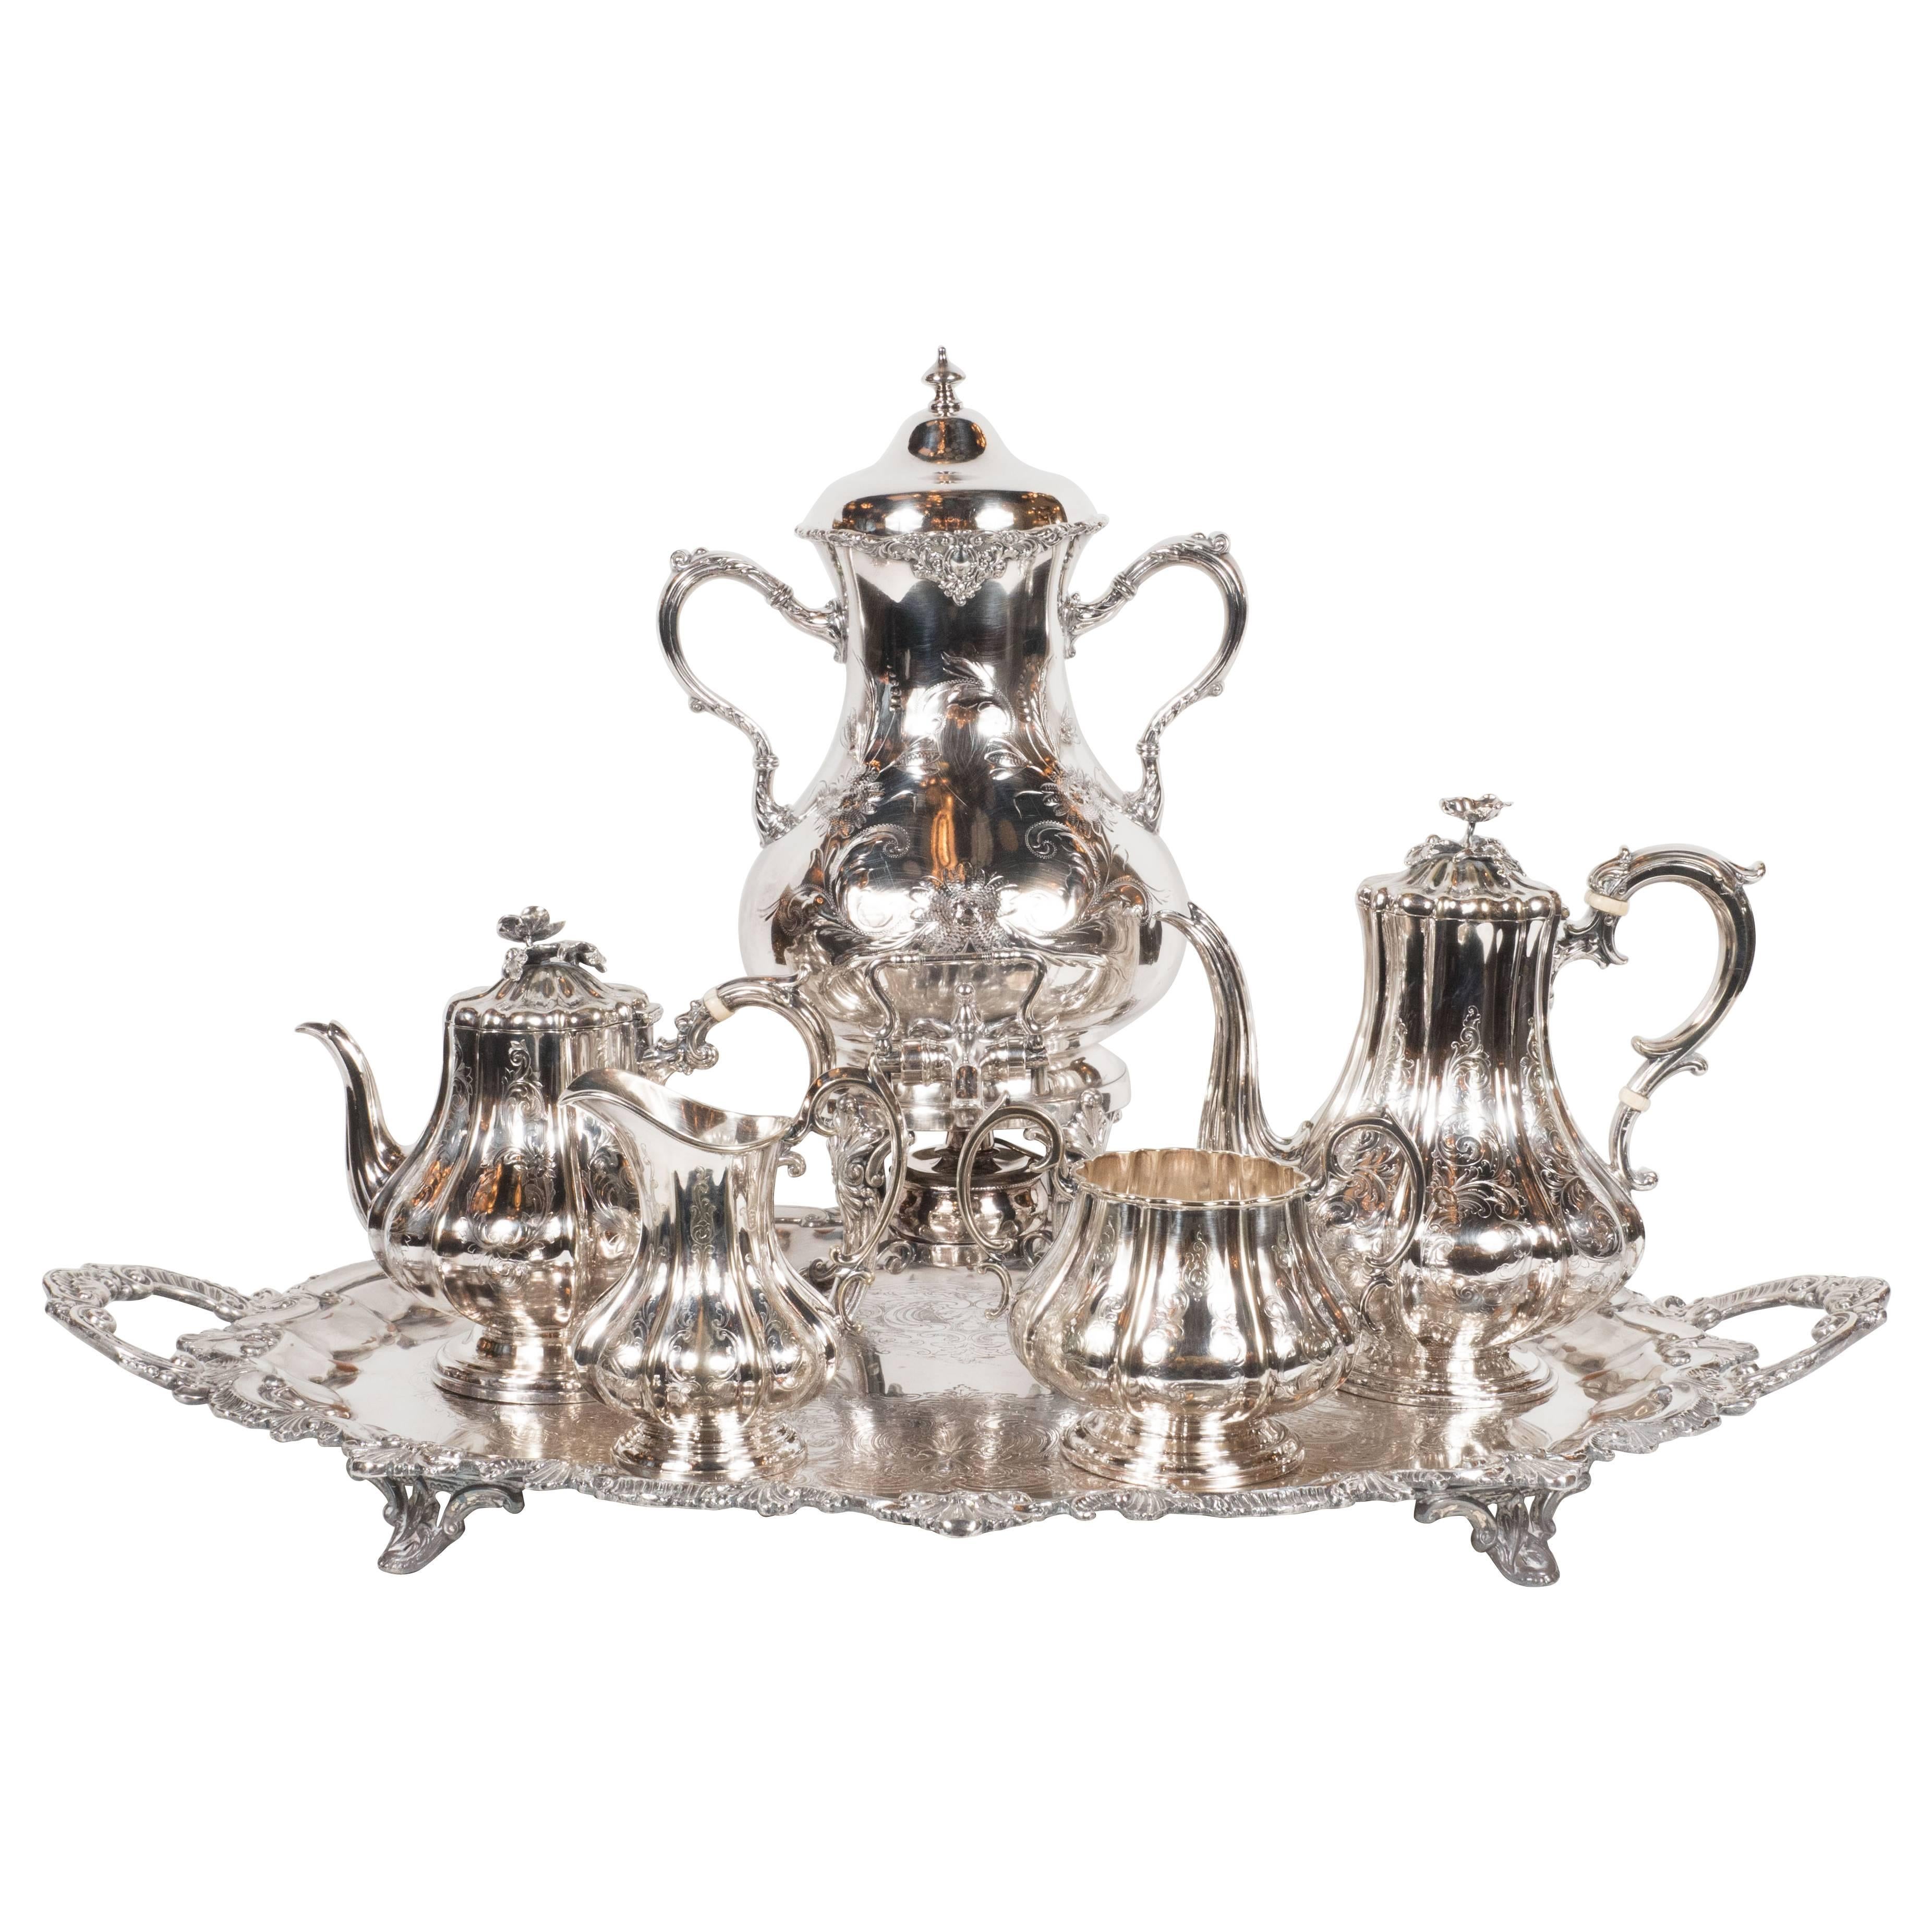 Elegant Neoclassical Silverplated Coffee/Tea Service by Elkington & Co.